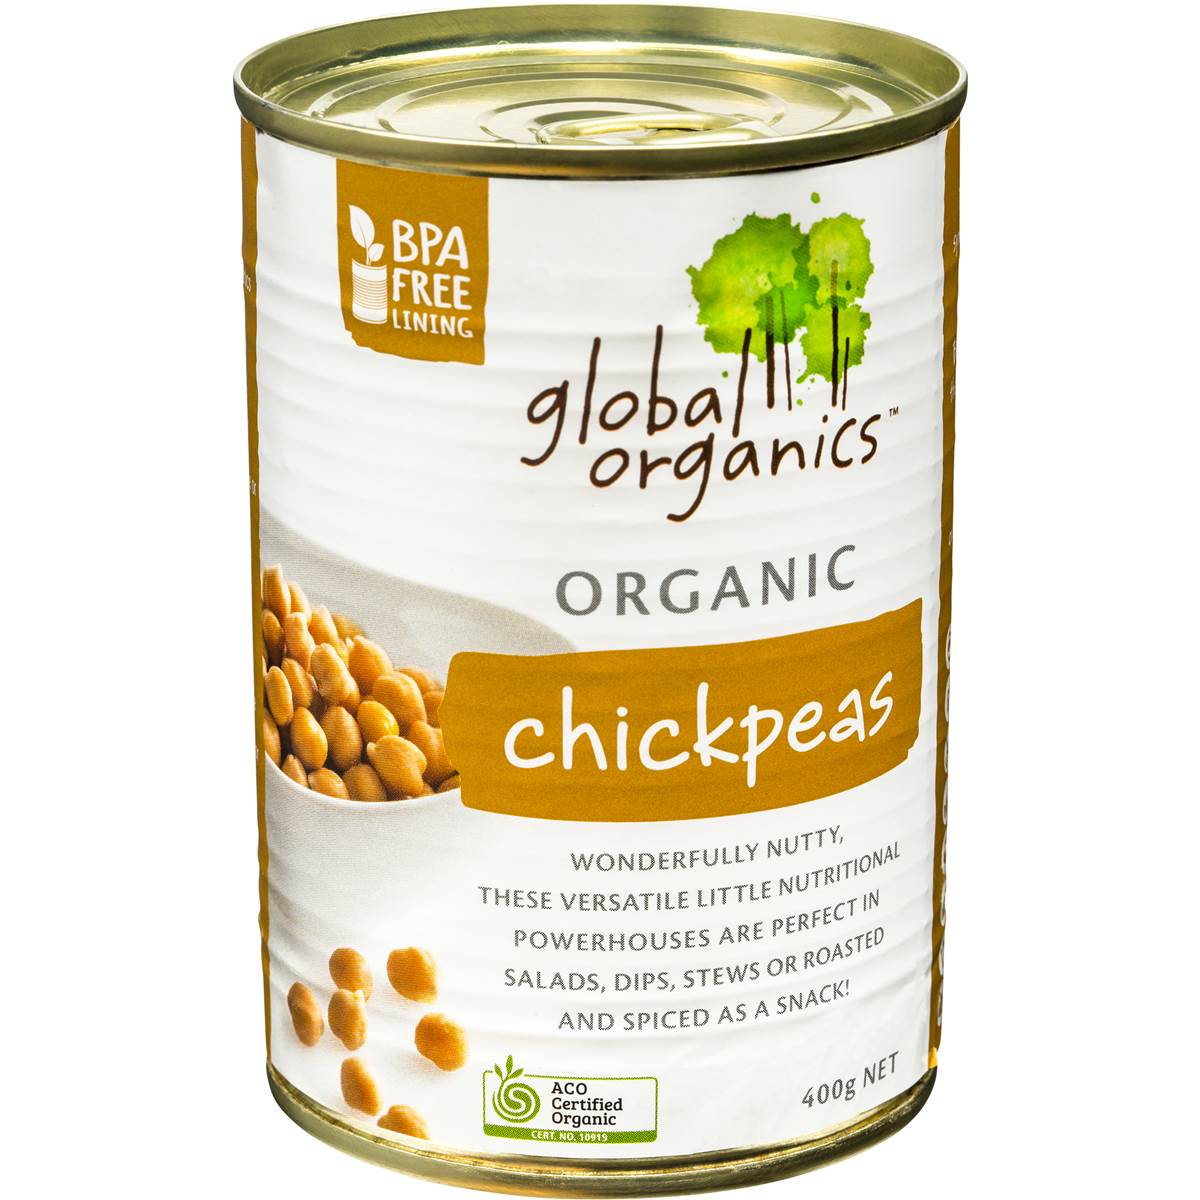 Calories in Global Organics Chickpeas Chickpeas